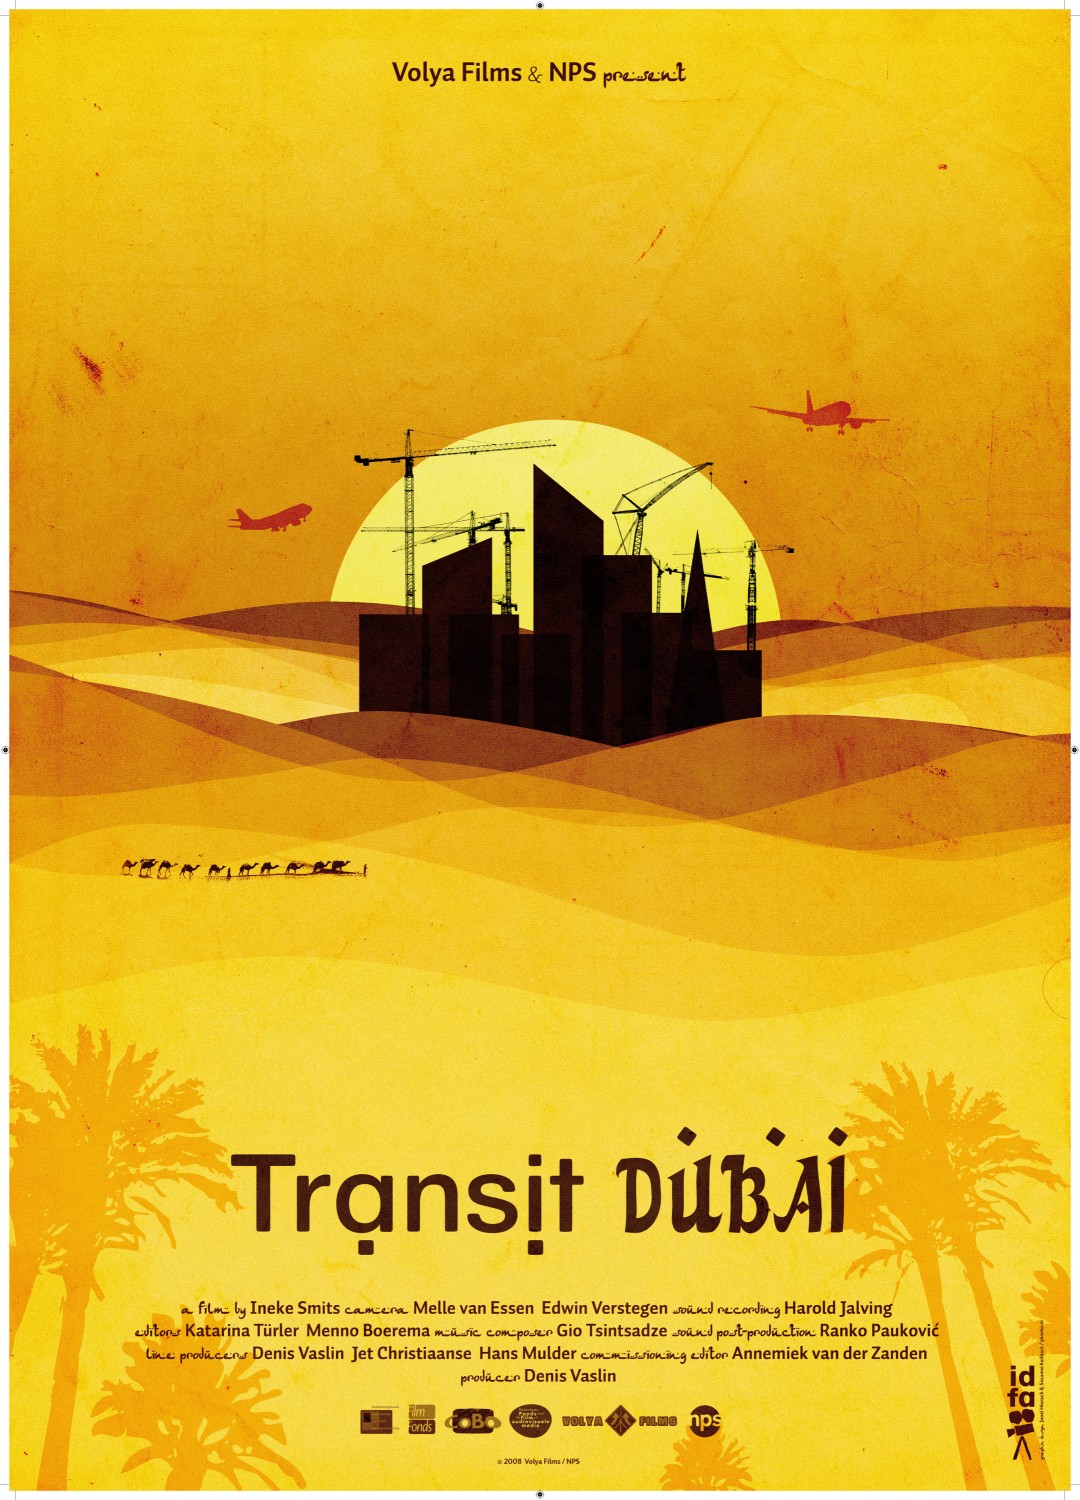 Extra Large Movie Poster Image for Transit Dubai 